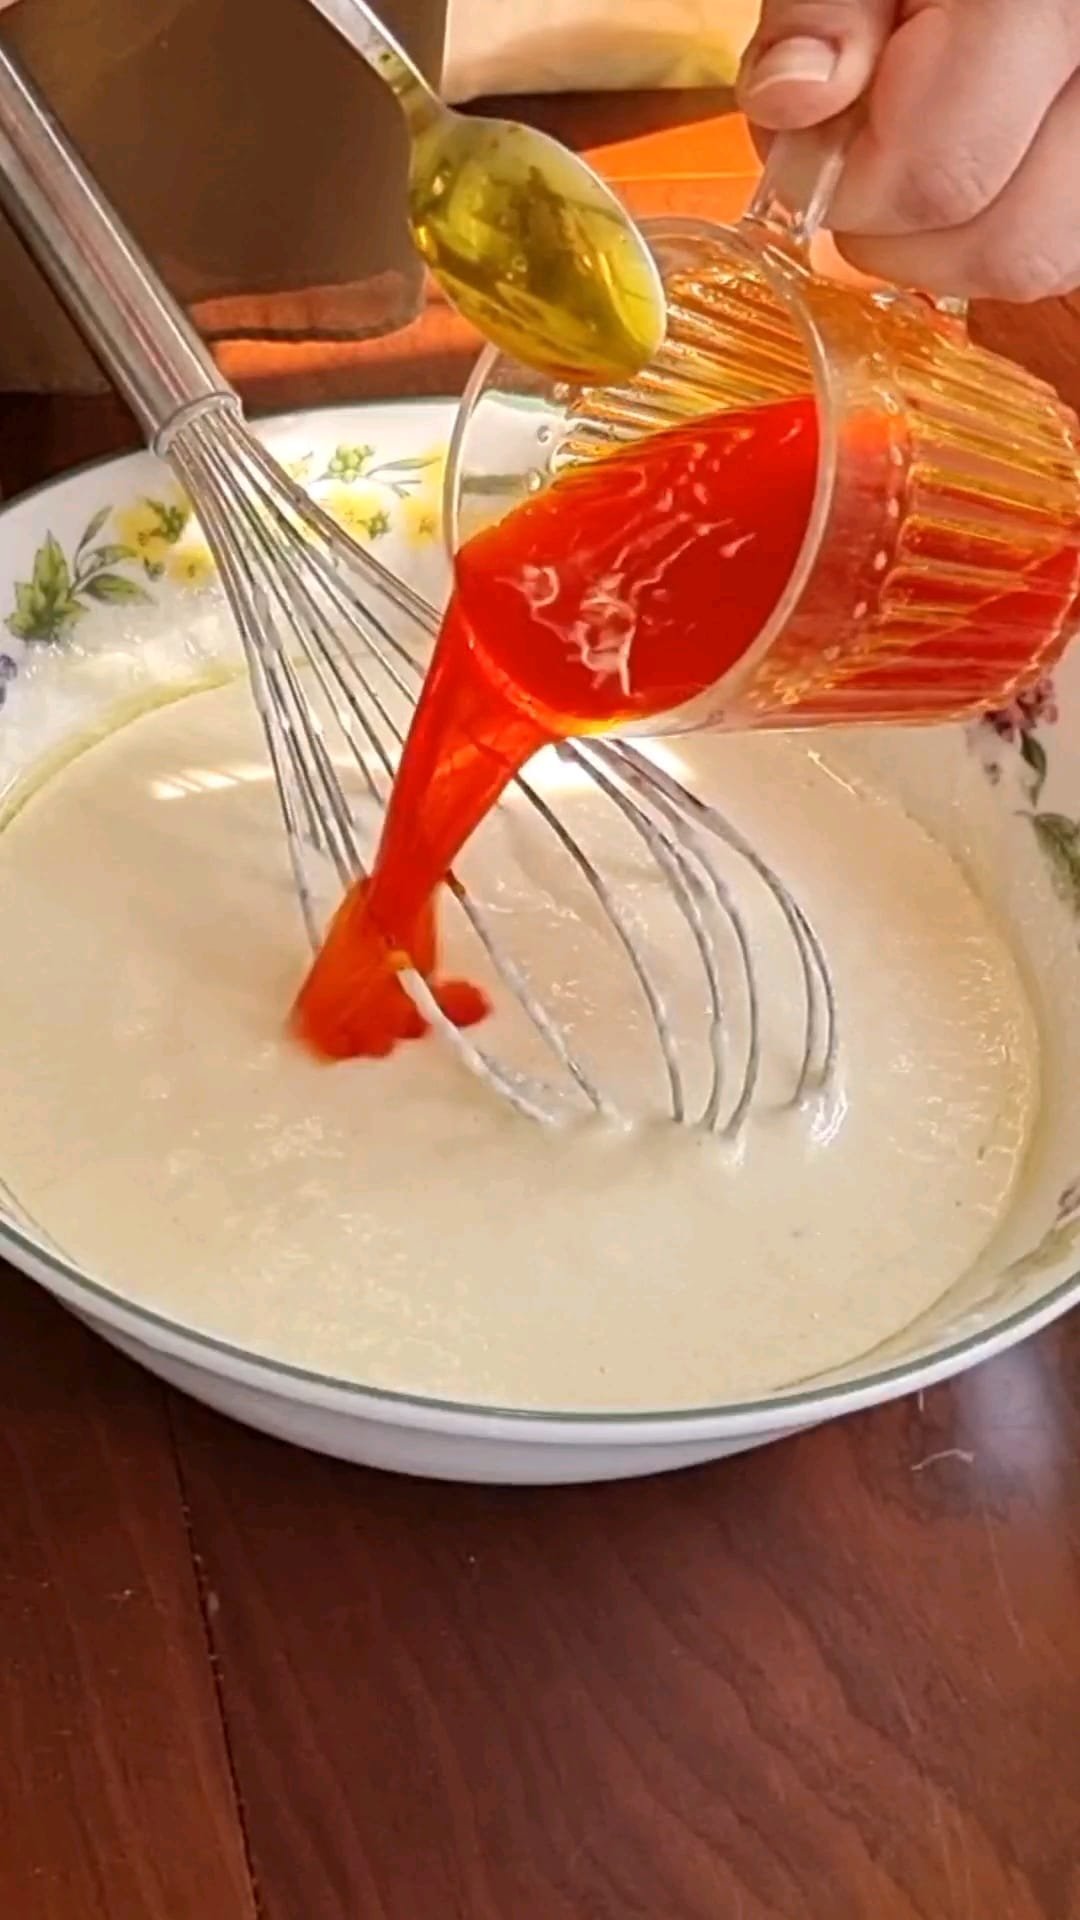 Add saffron to the yogurt and mix.